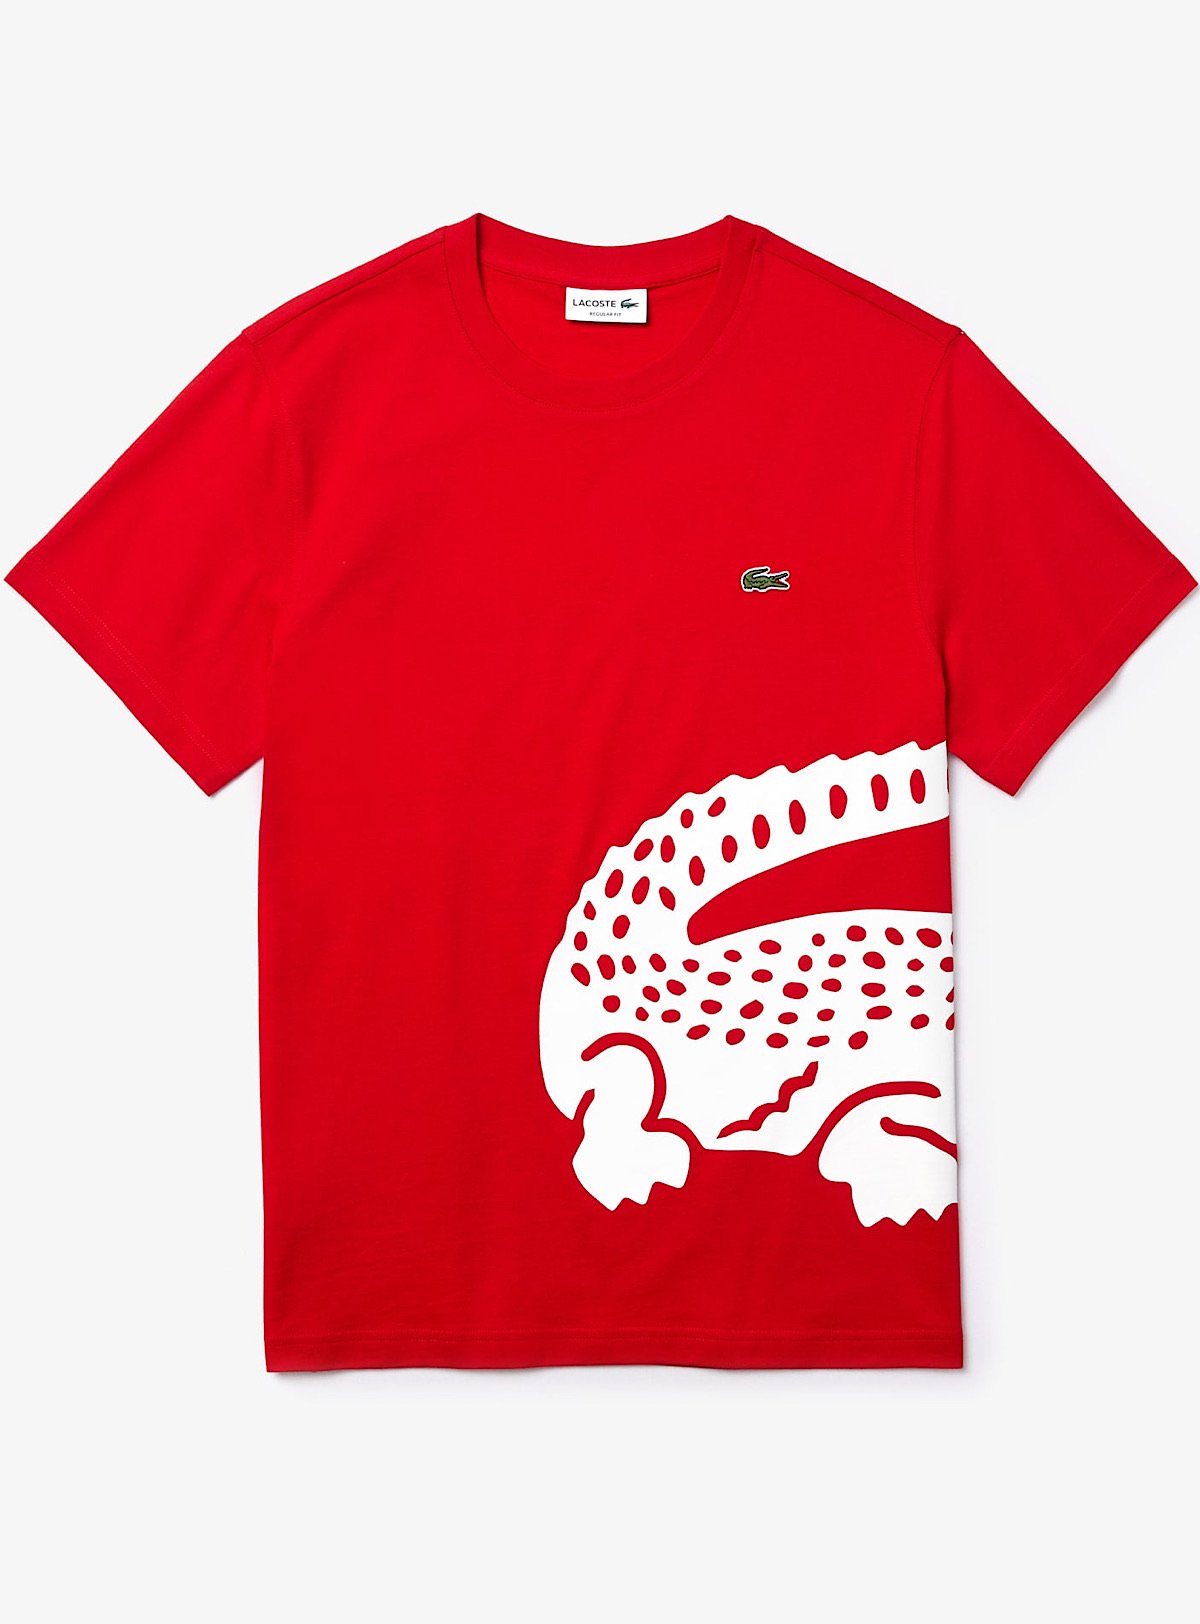 Lacoste T-Shirt - Big Croc - Red 